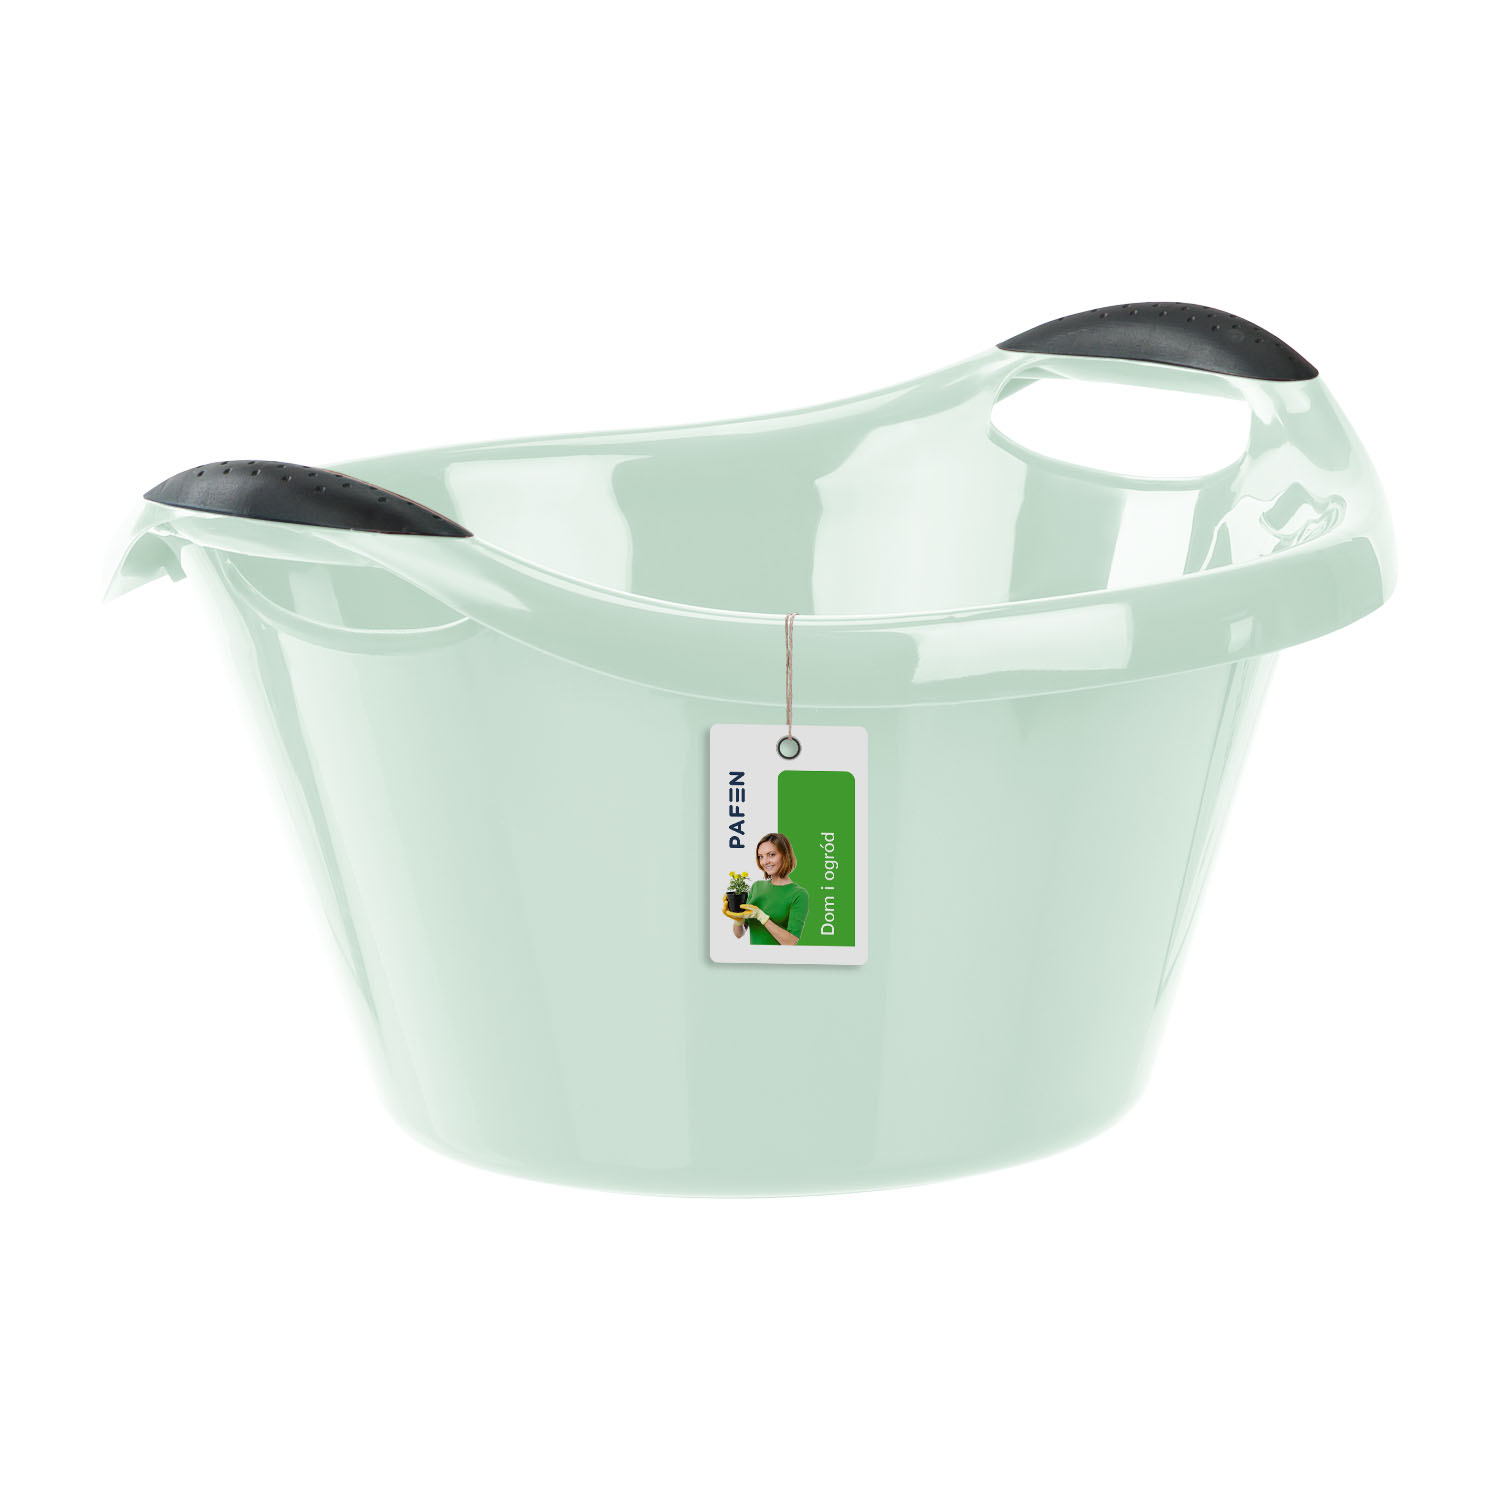 Laundry bowl Green